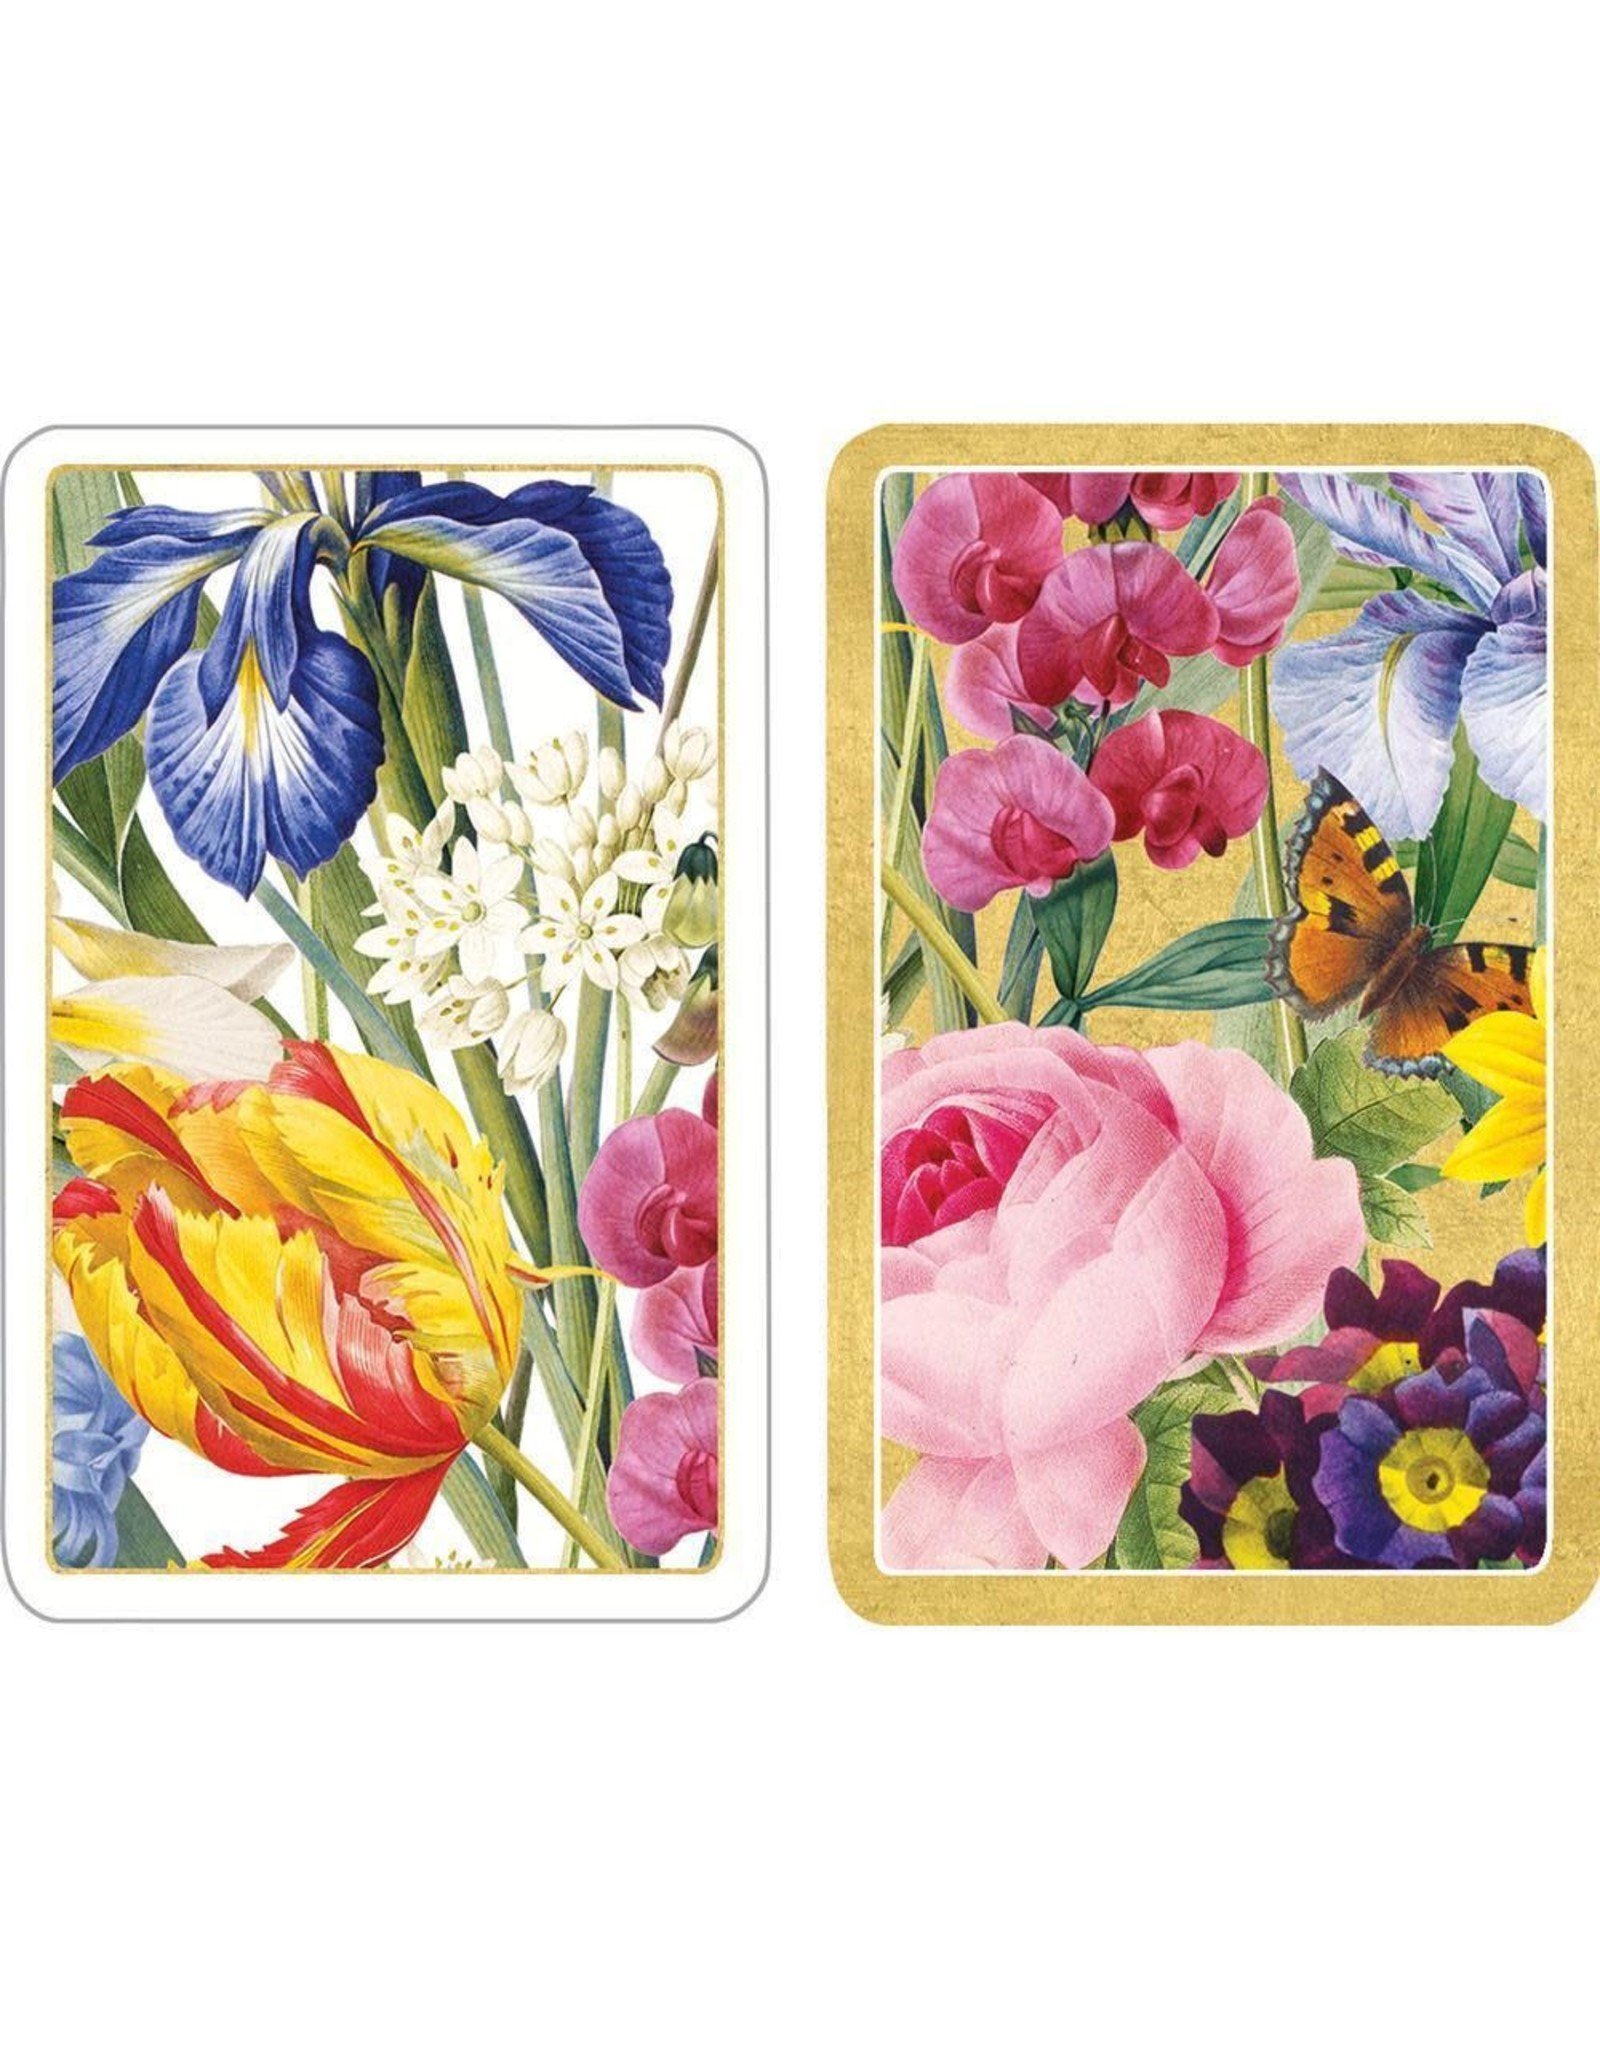 Caspari Playing Cards 2 Decks of Redoute Floral Bridge Cards